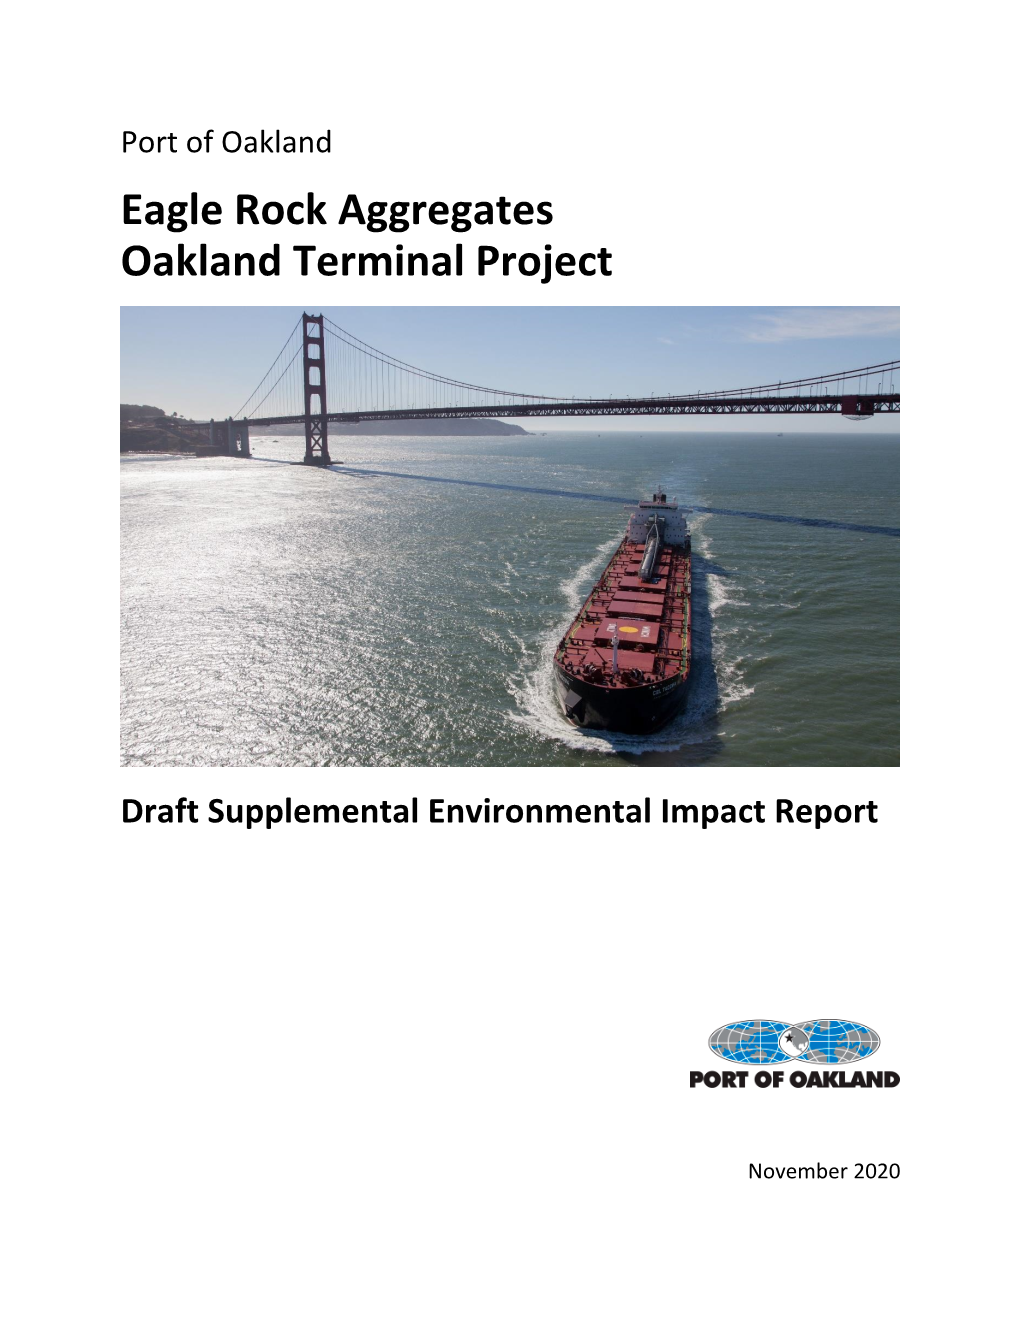 Eagle Rock Aggregates Oakland Terminal Project